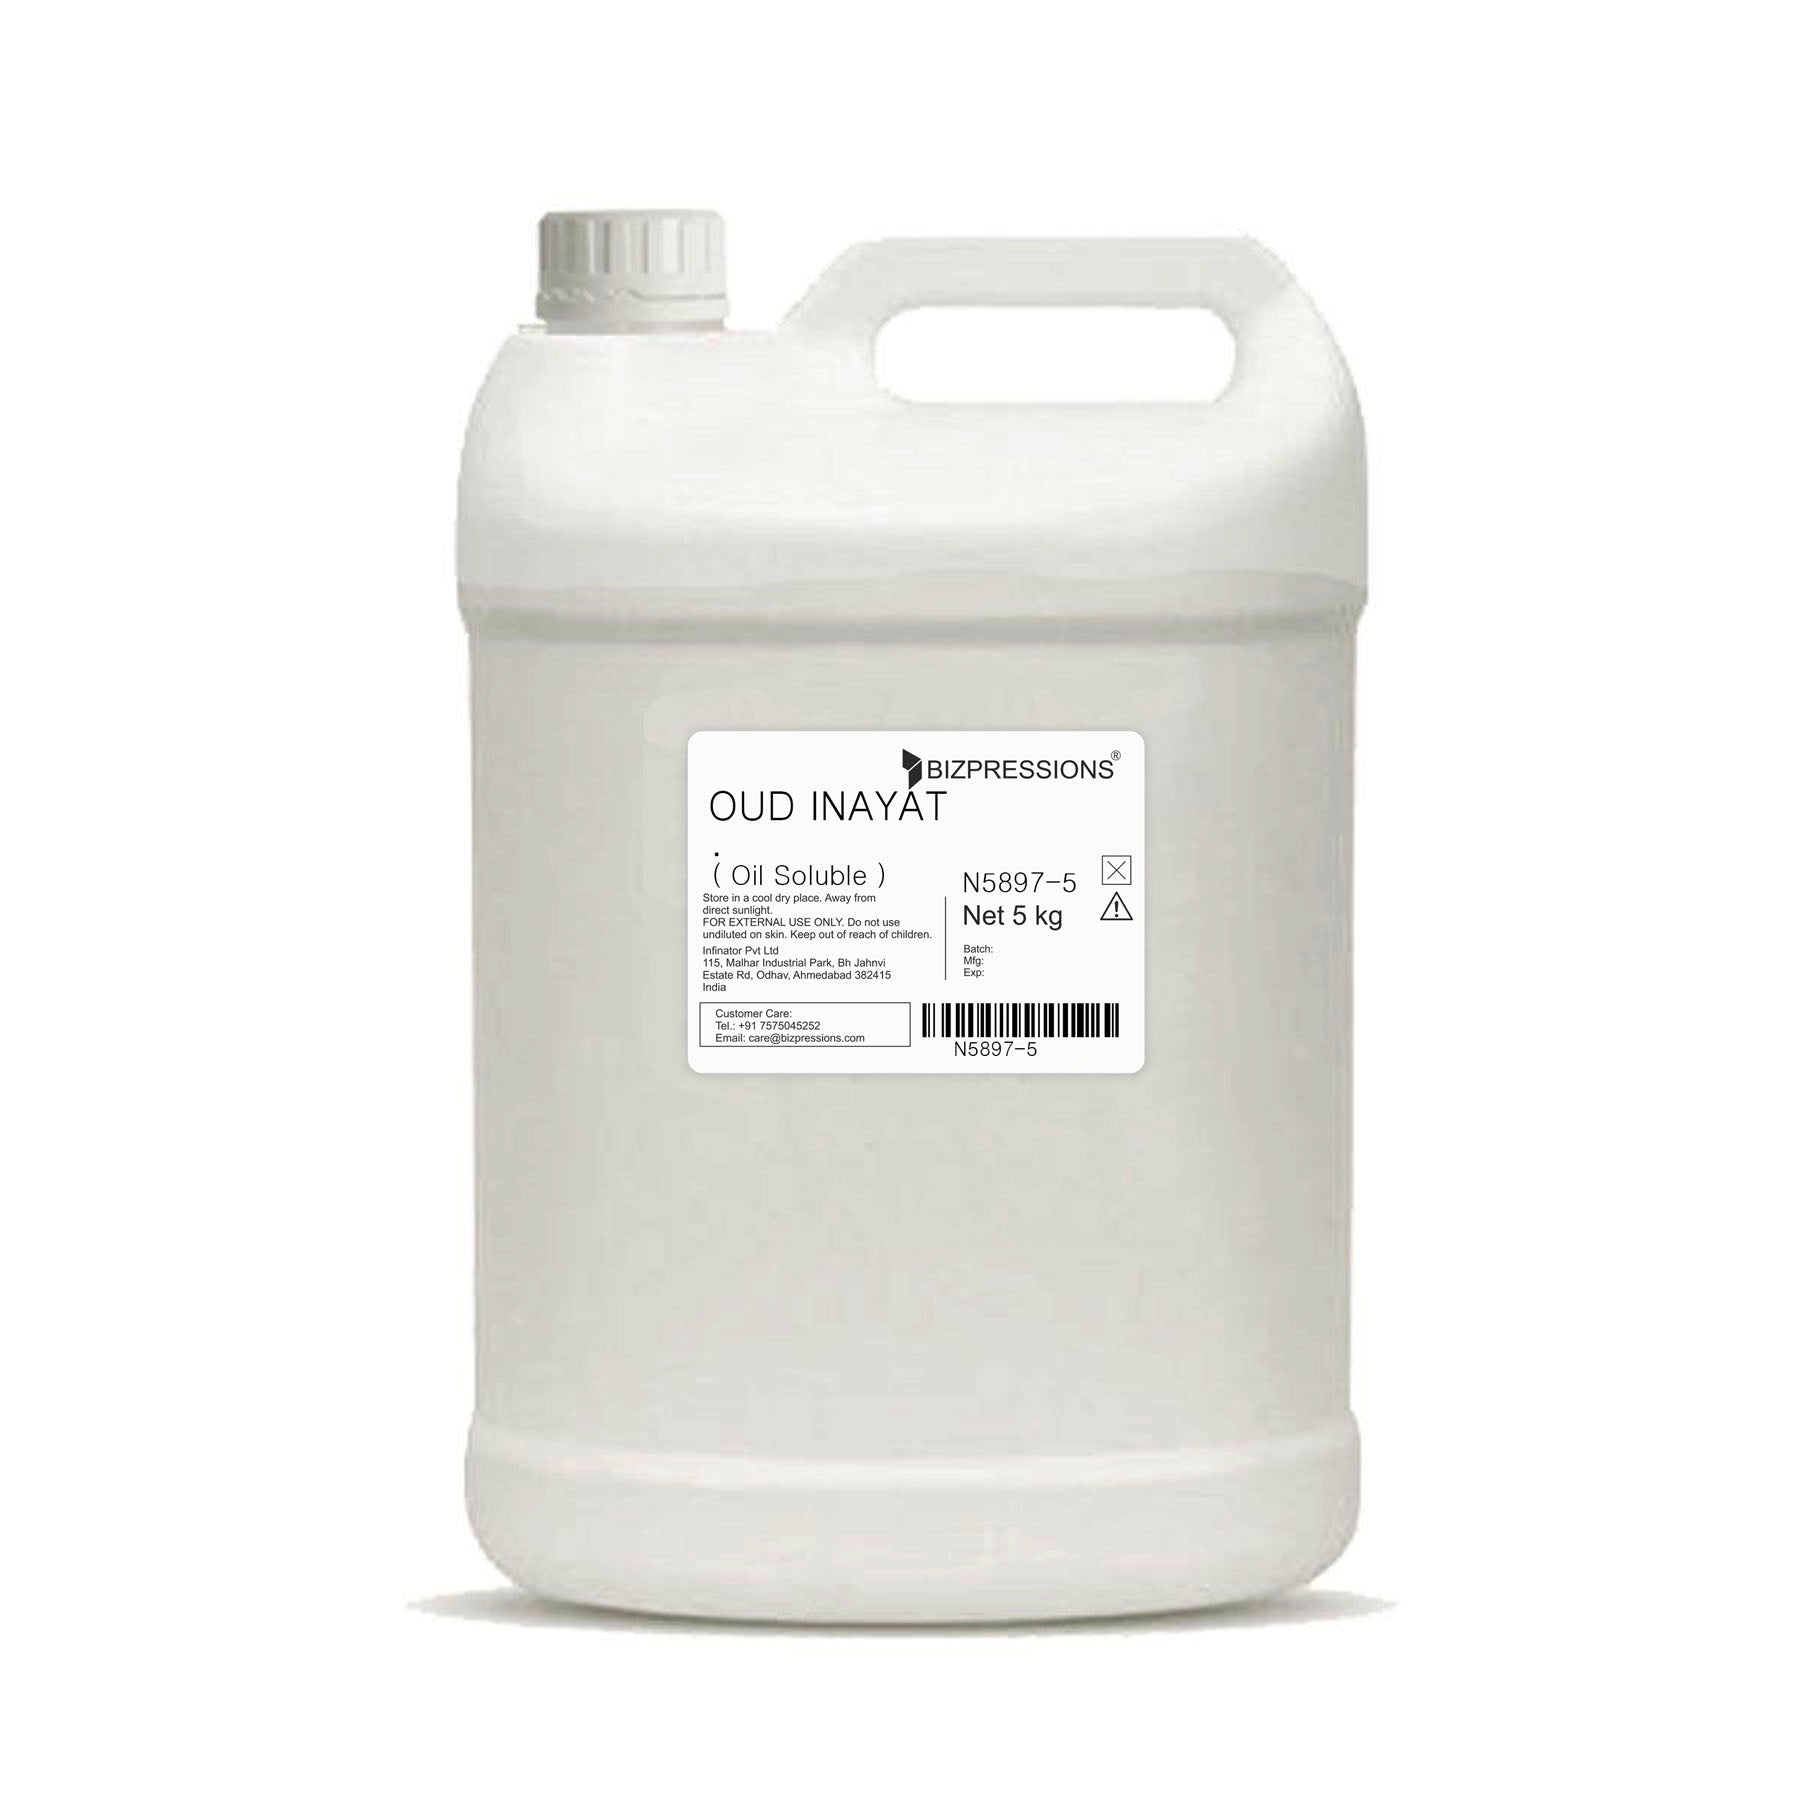 OUD INAYAT - Fragrance ( Oil Soluble ) - 5 kg